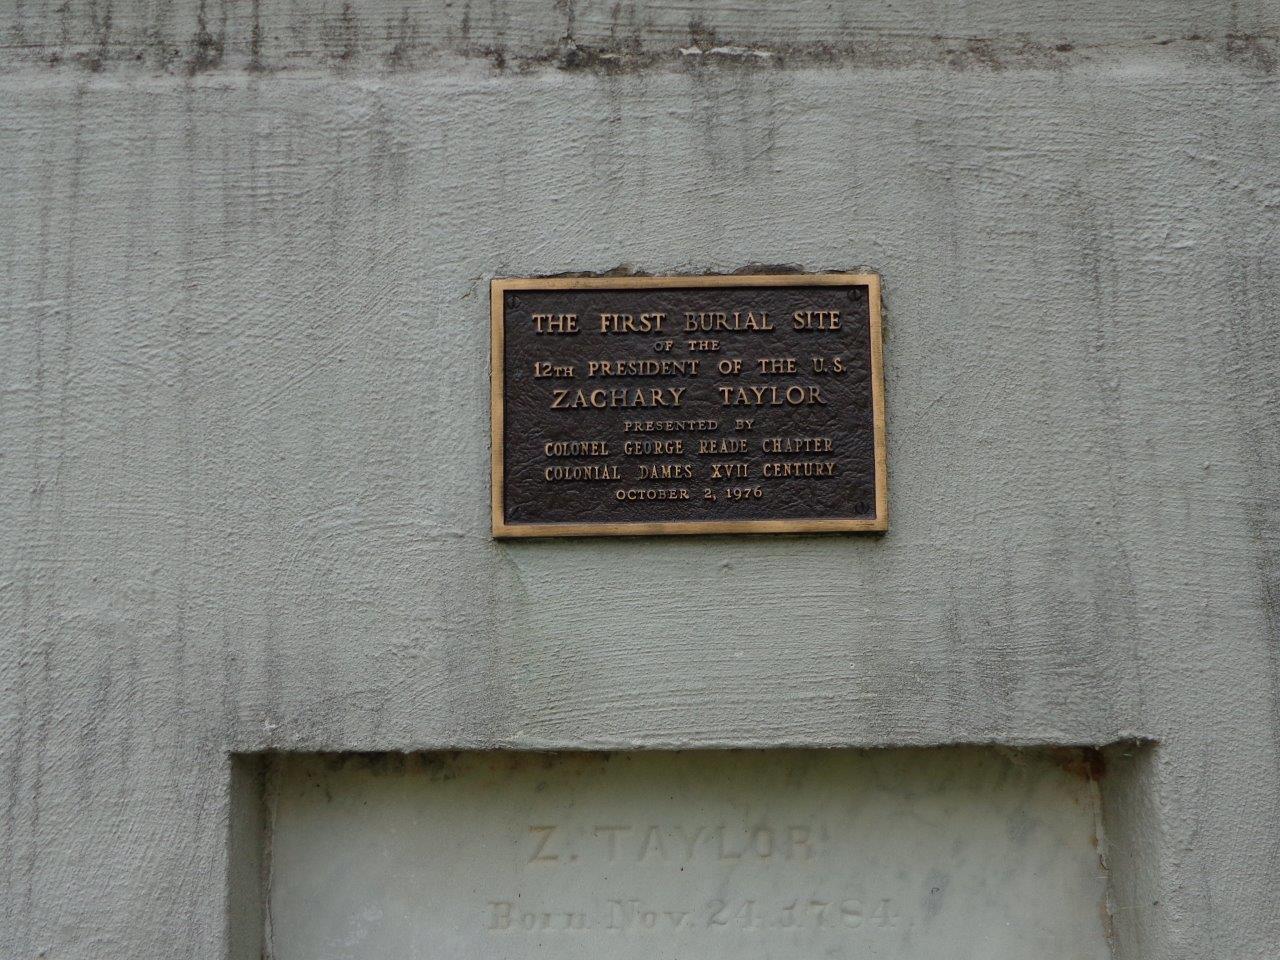 Zachary Taylor original burial site marker